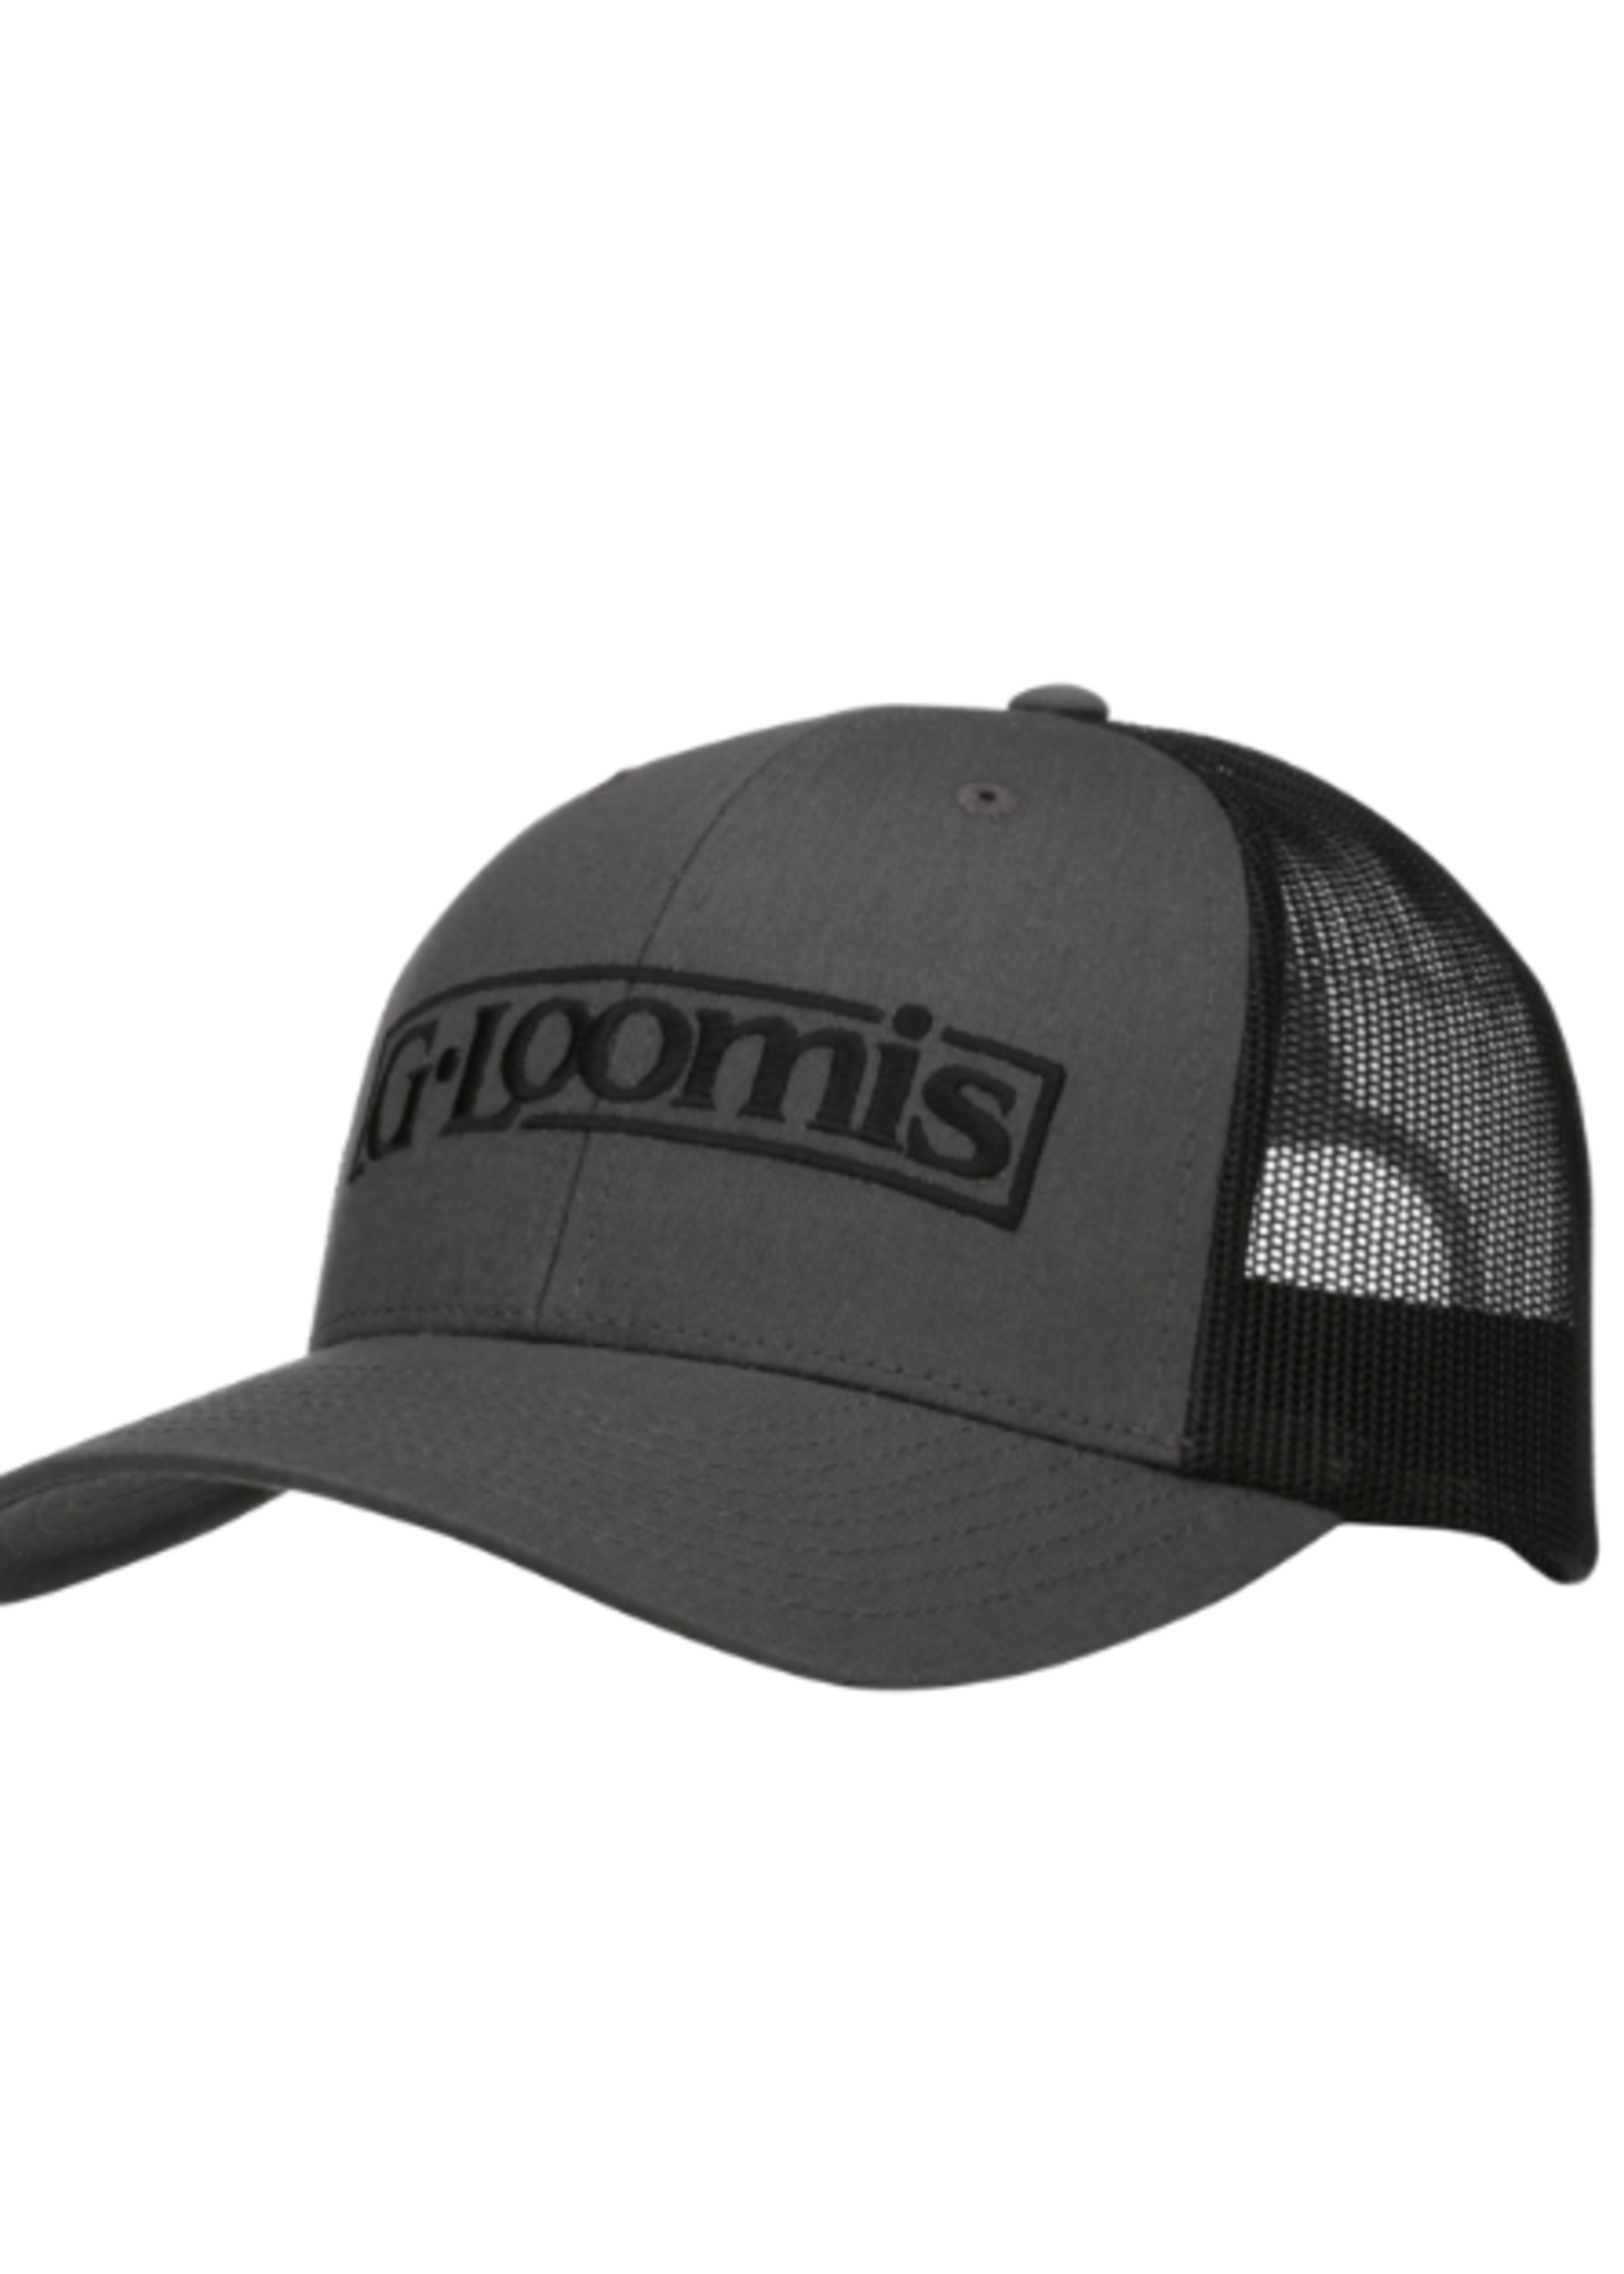 GLoomis GLoomis Hat Charcoal/Black